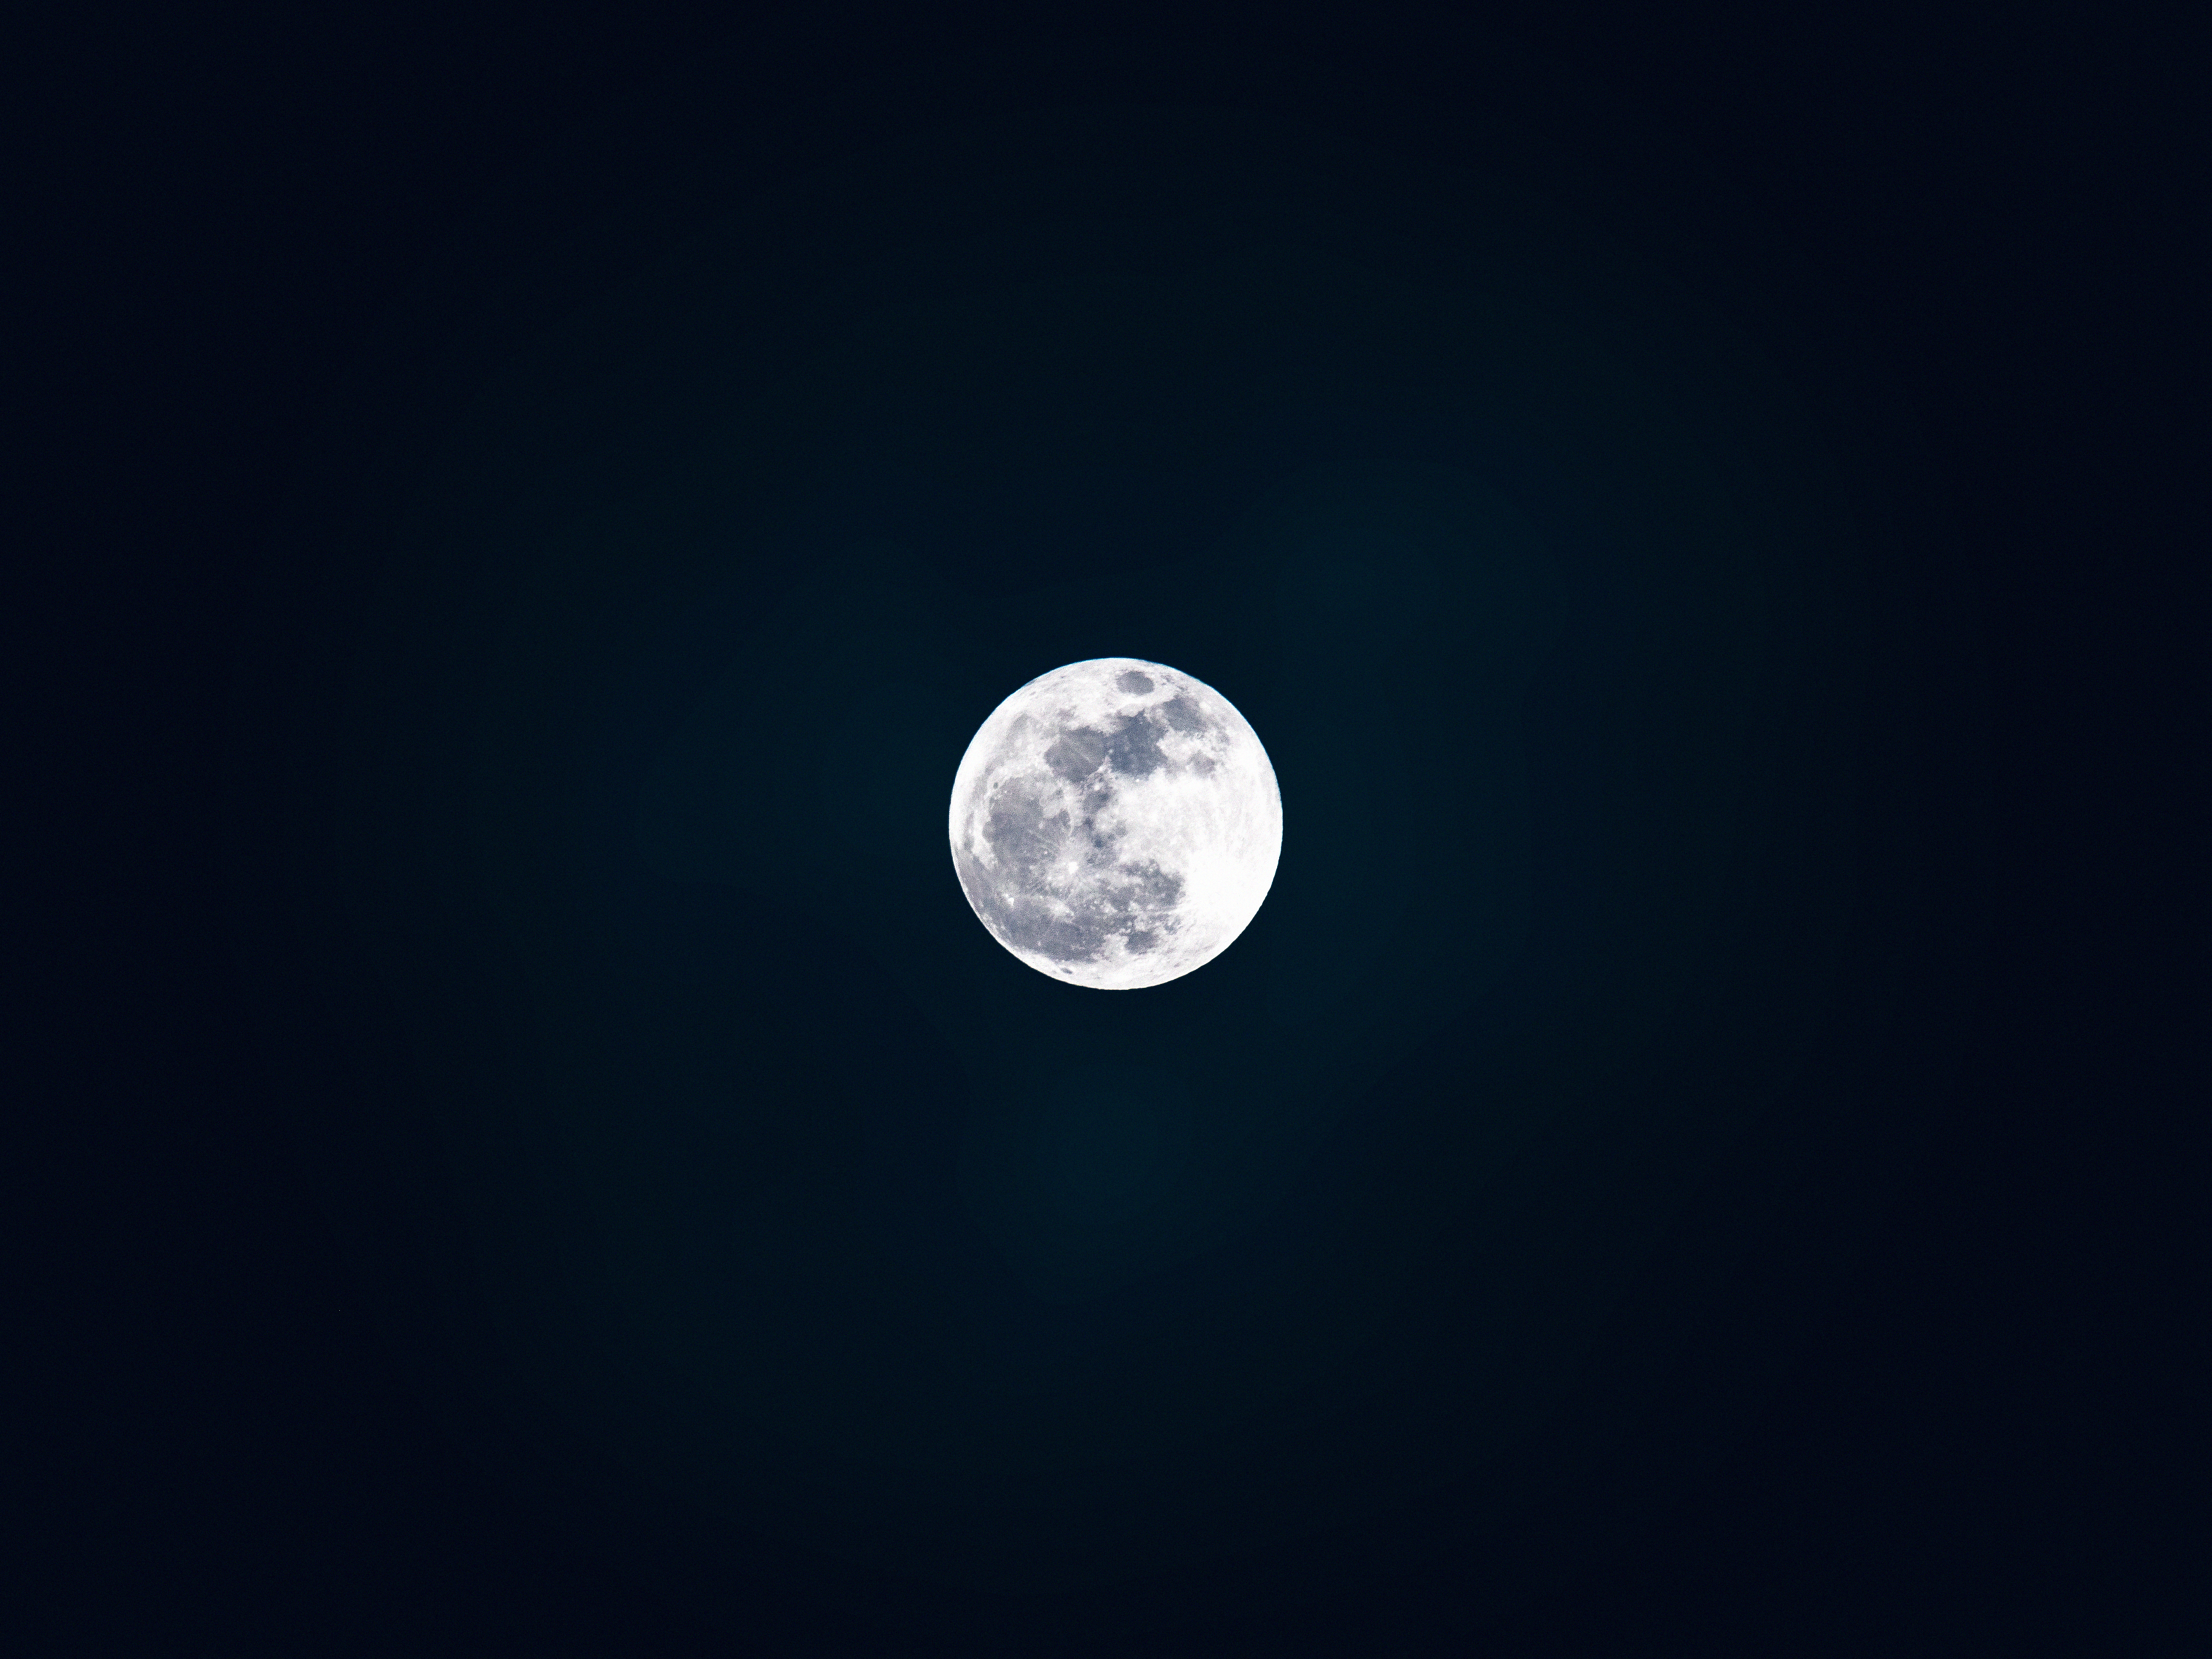 chb, moon, full moon, dark, night, universe, bw, satellite